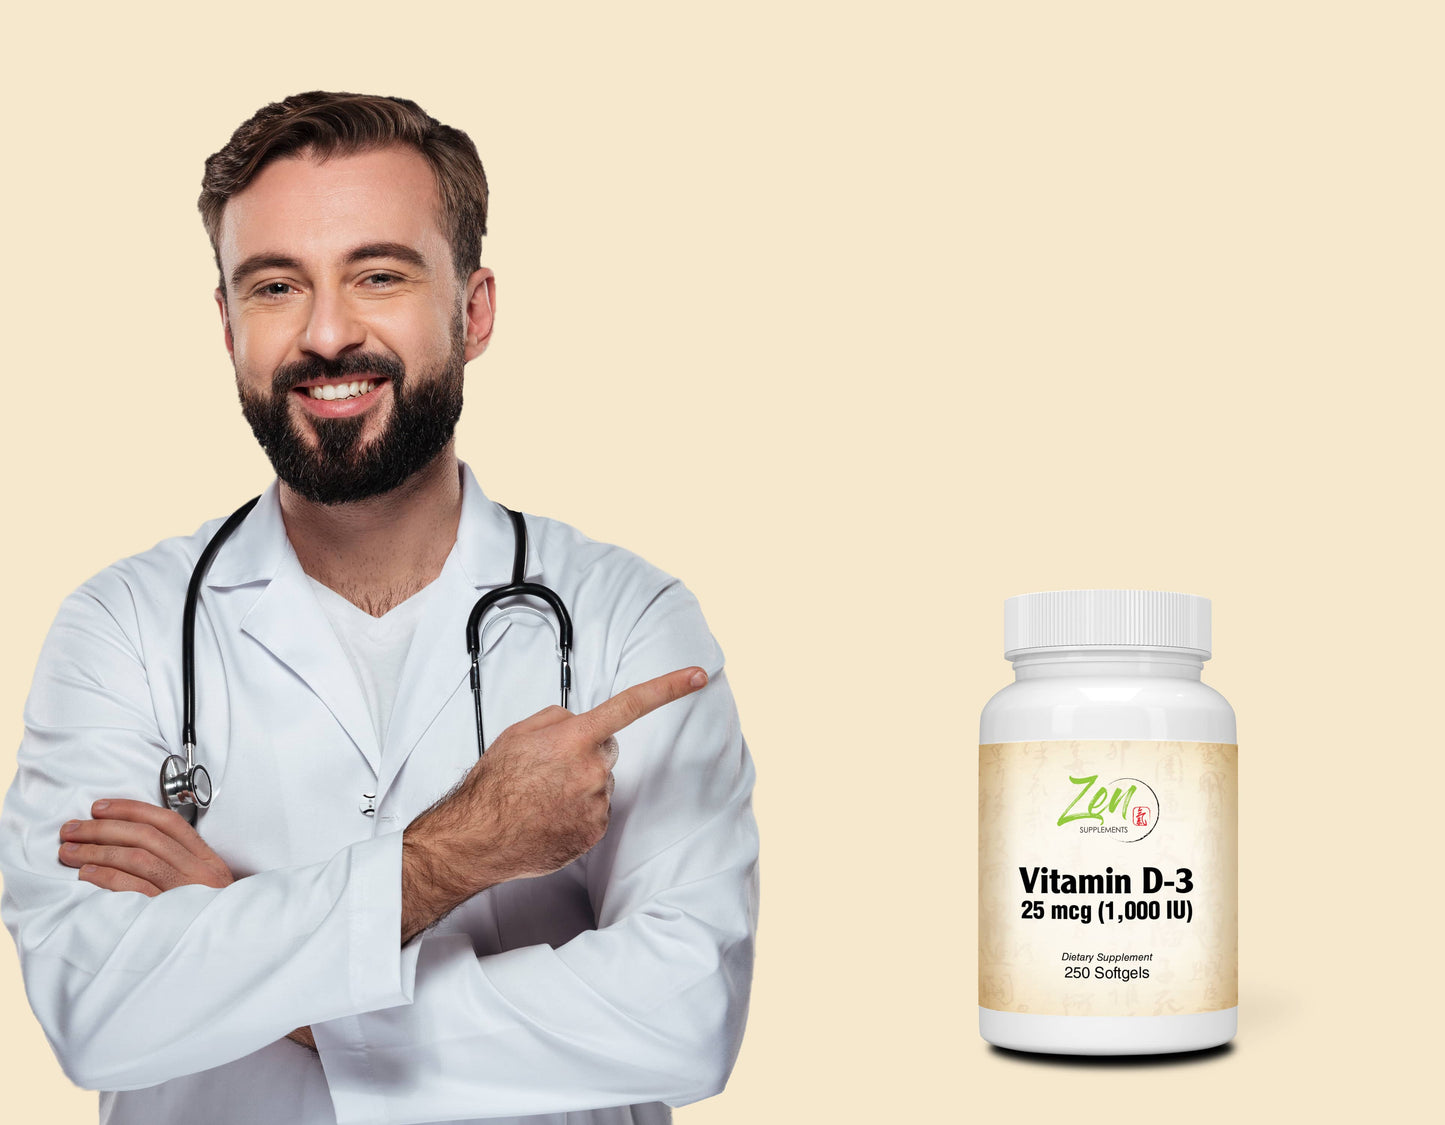 Vitamin D-3 1,000IU - 250 Softgel